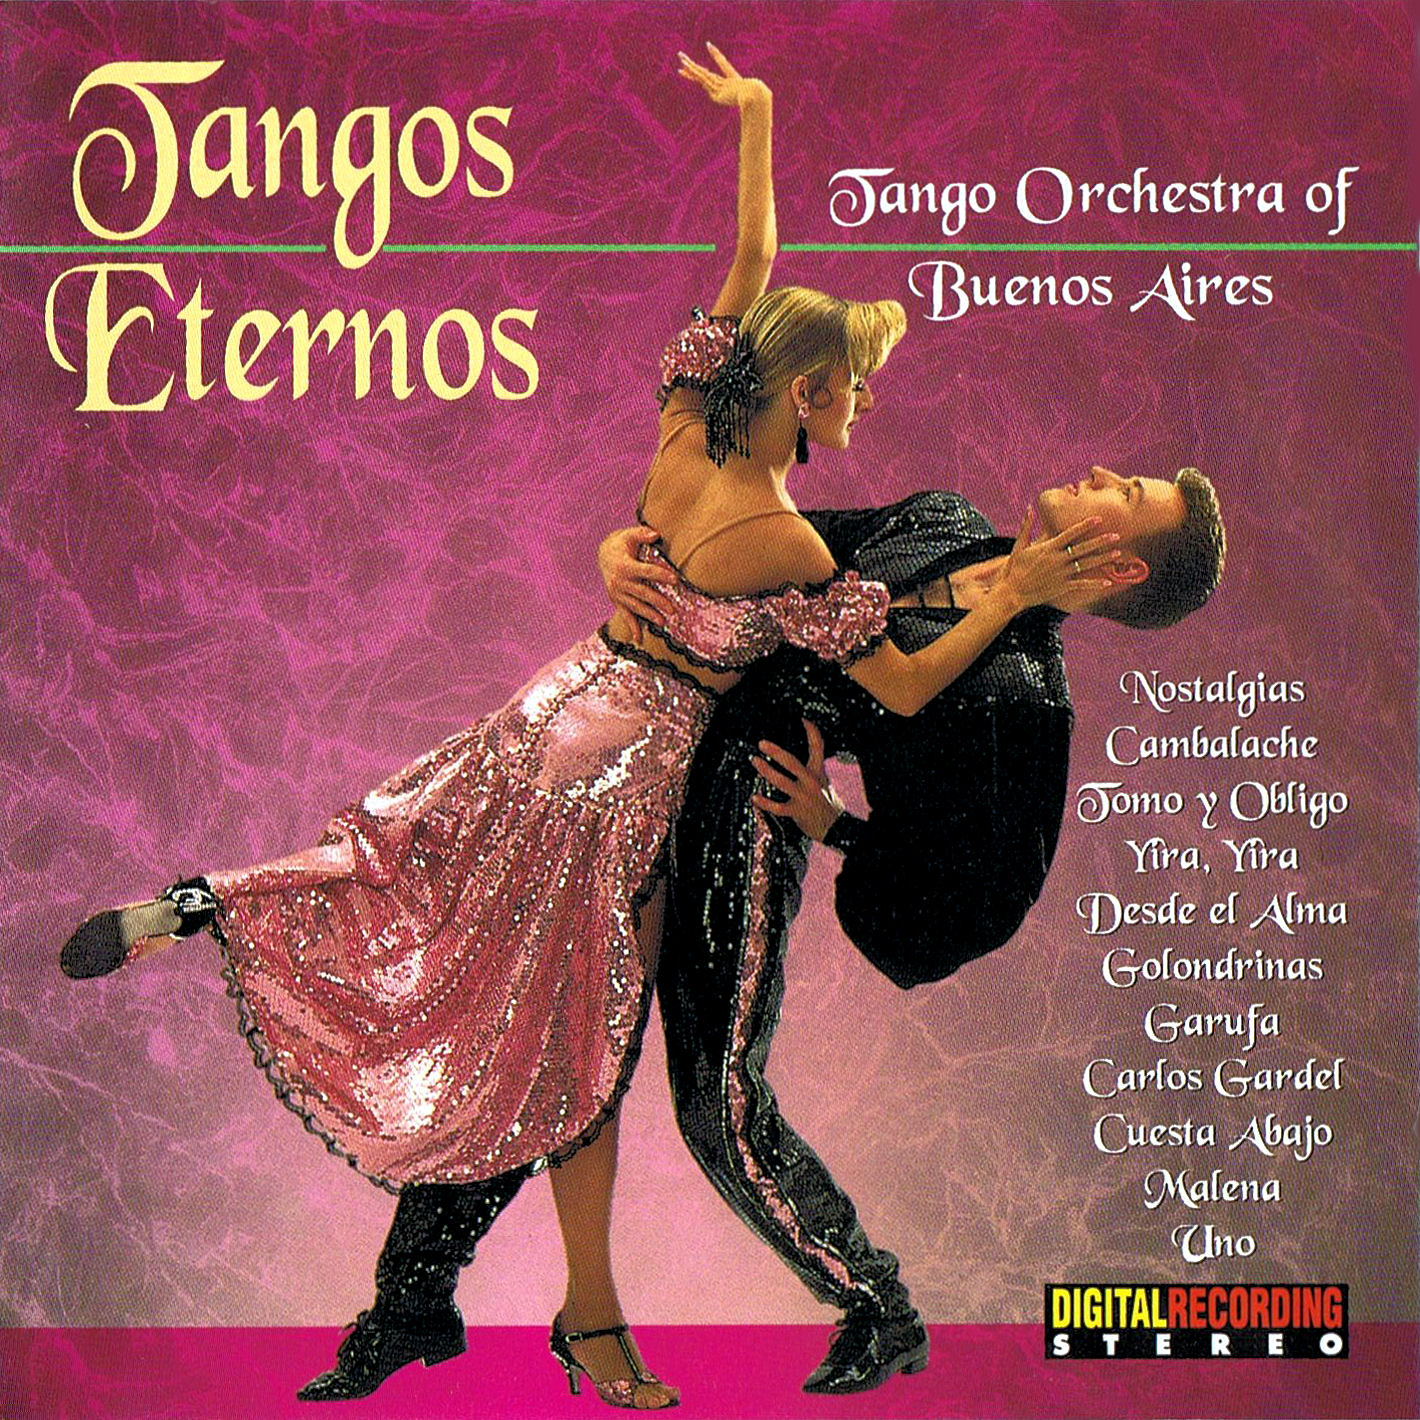 Tango orchestra. Танго оркестр. Буэнос Айрес танго. Tango Orchestra misterioso. Аргентинское танго под оркестр.